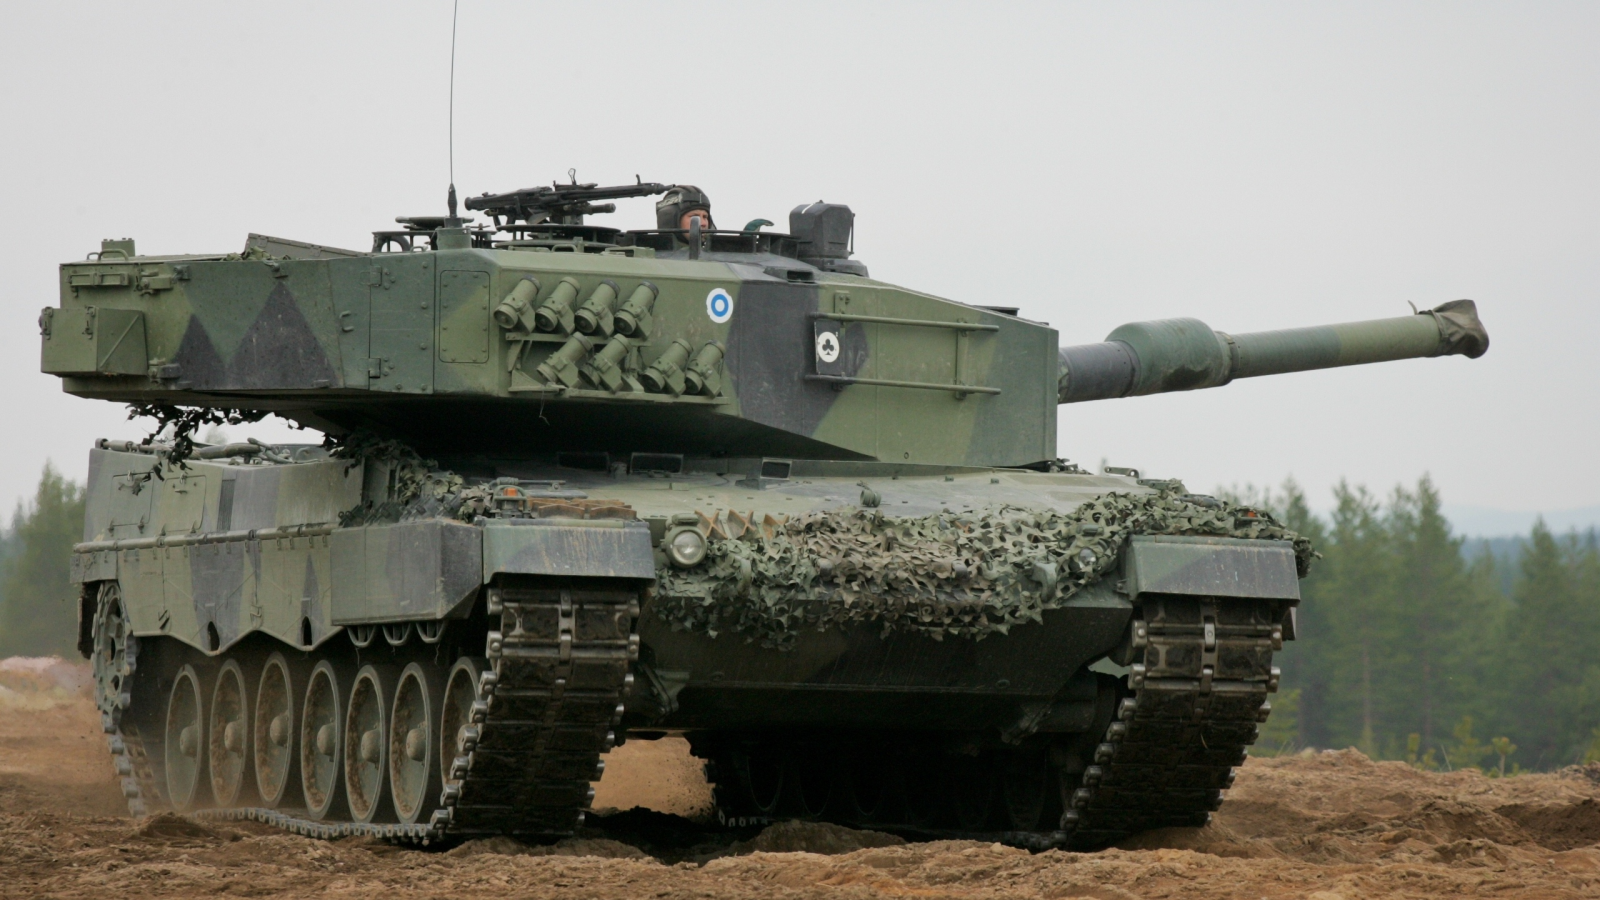 финляндия, мощь, леопард 2а4, танк